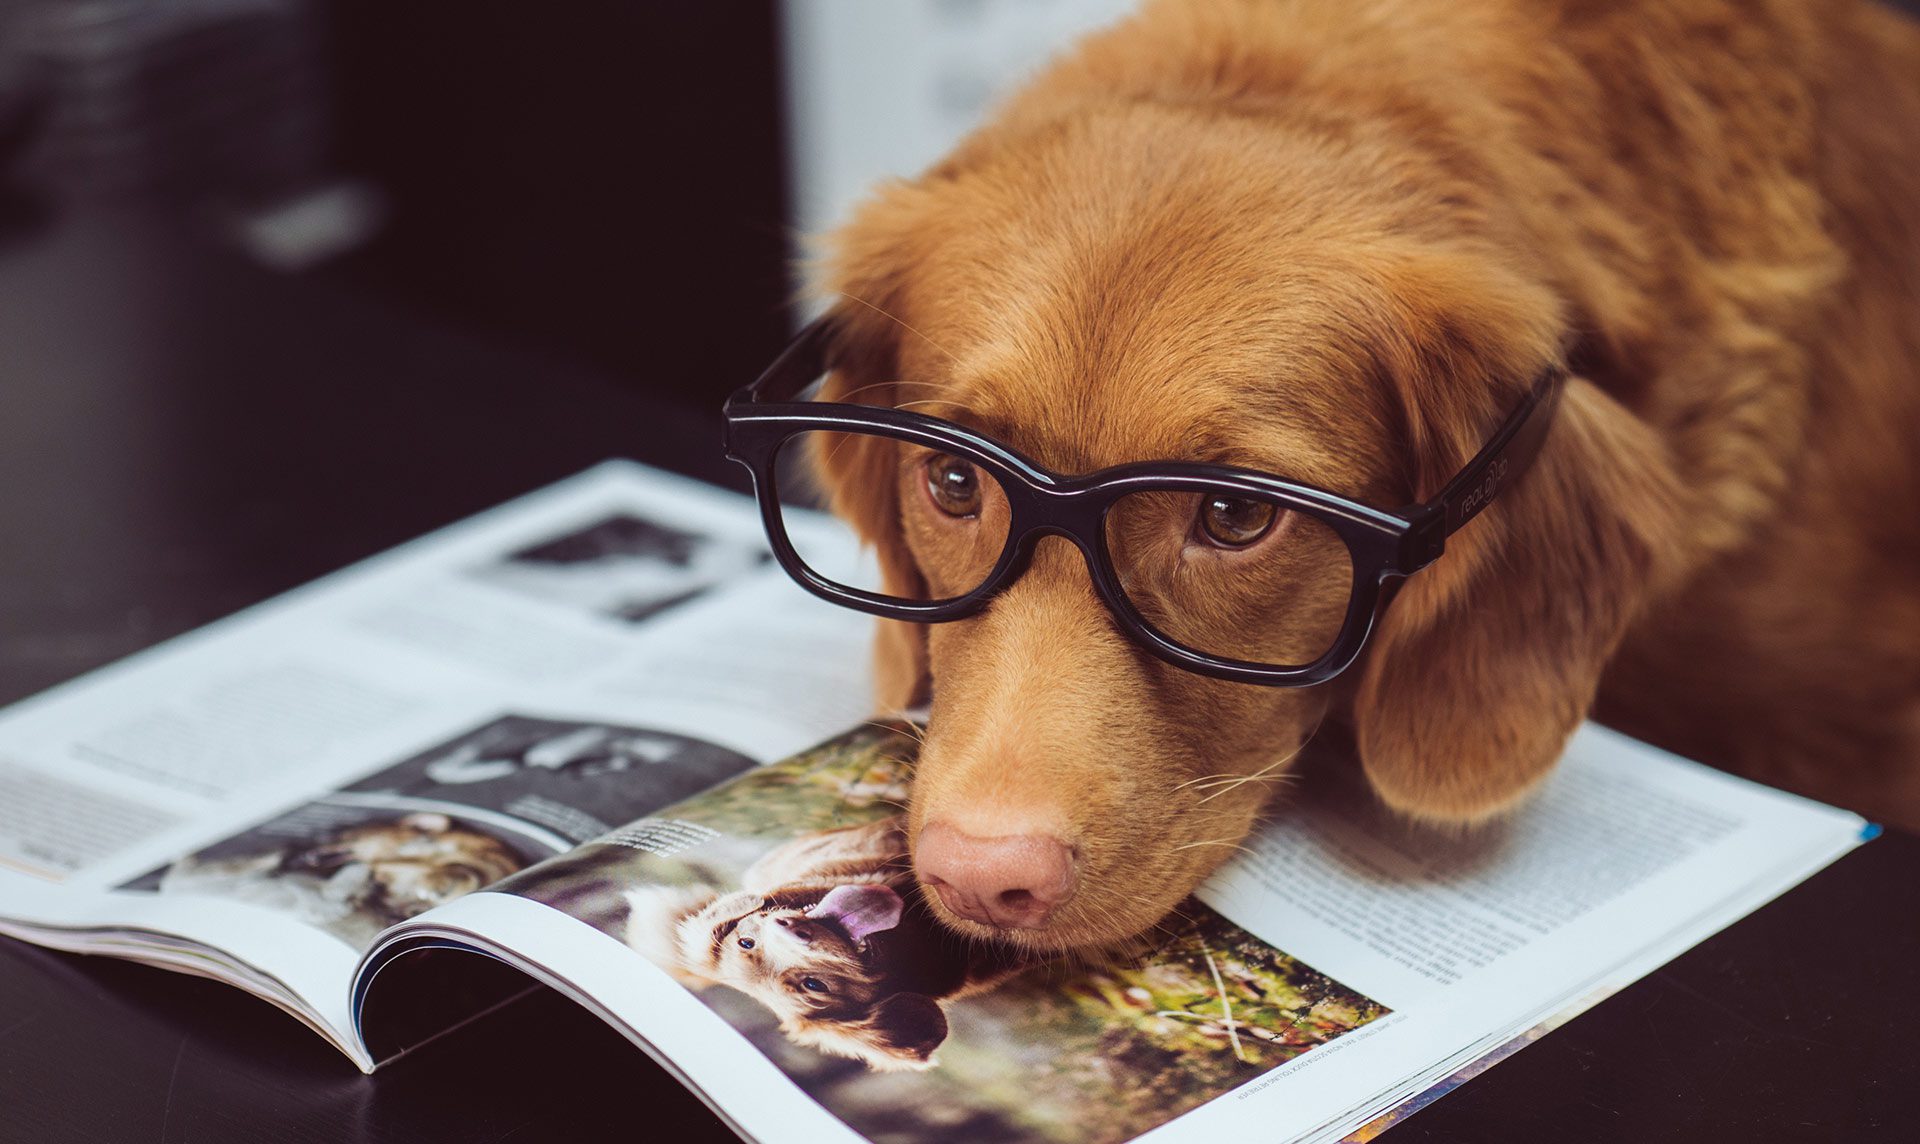 Dog wearing glasses